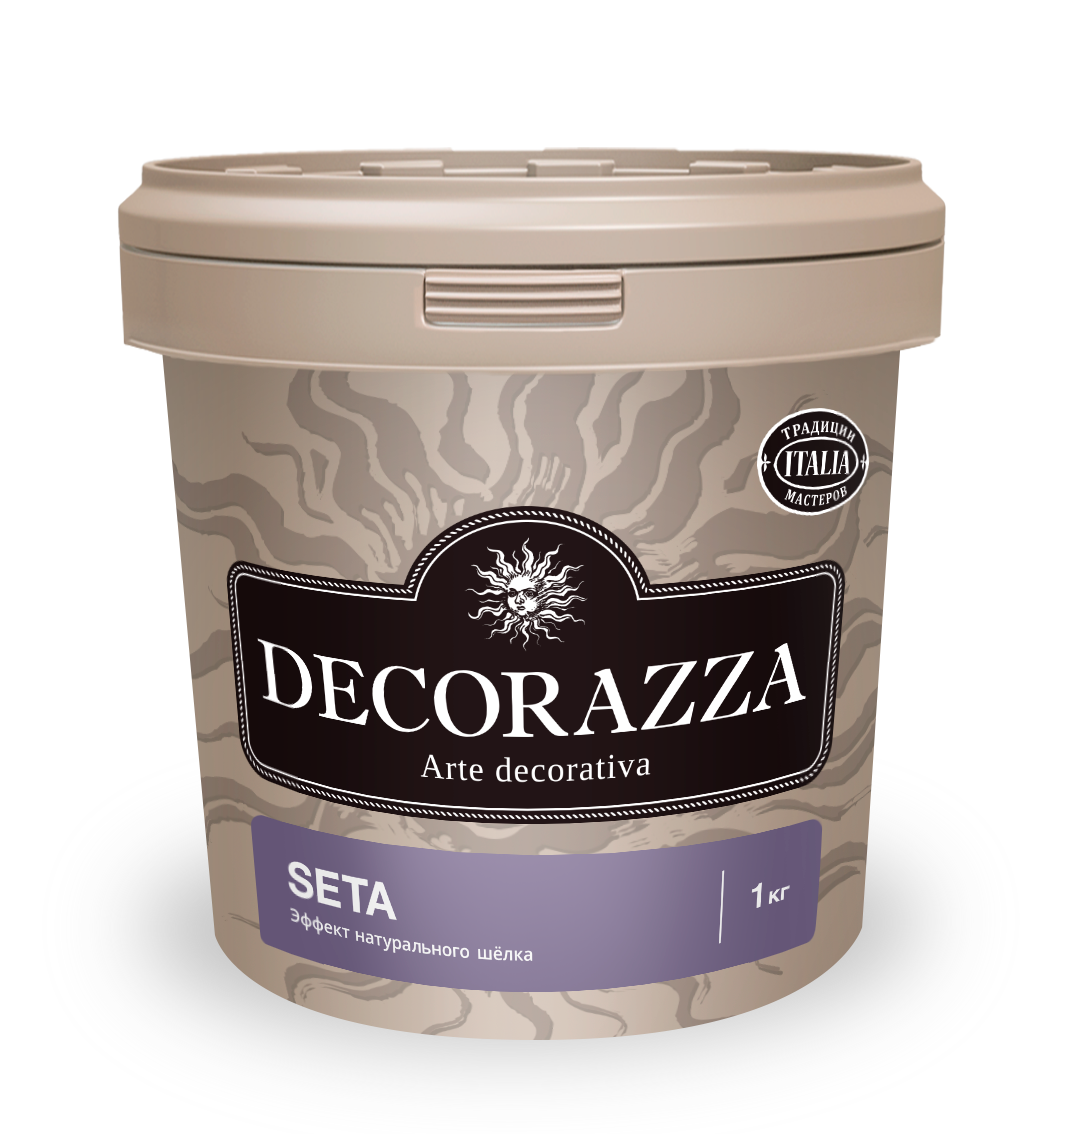 Декоративная штукатурка эффект натурального шелка Decorazza Seta, серебро. ST 001, 1 кг